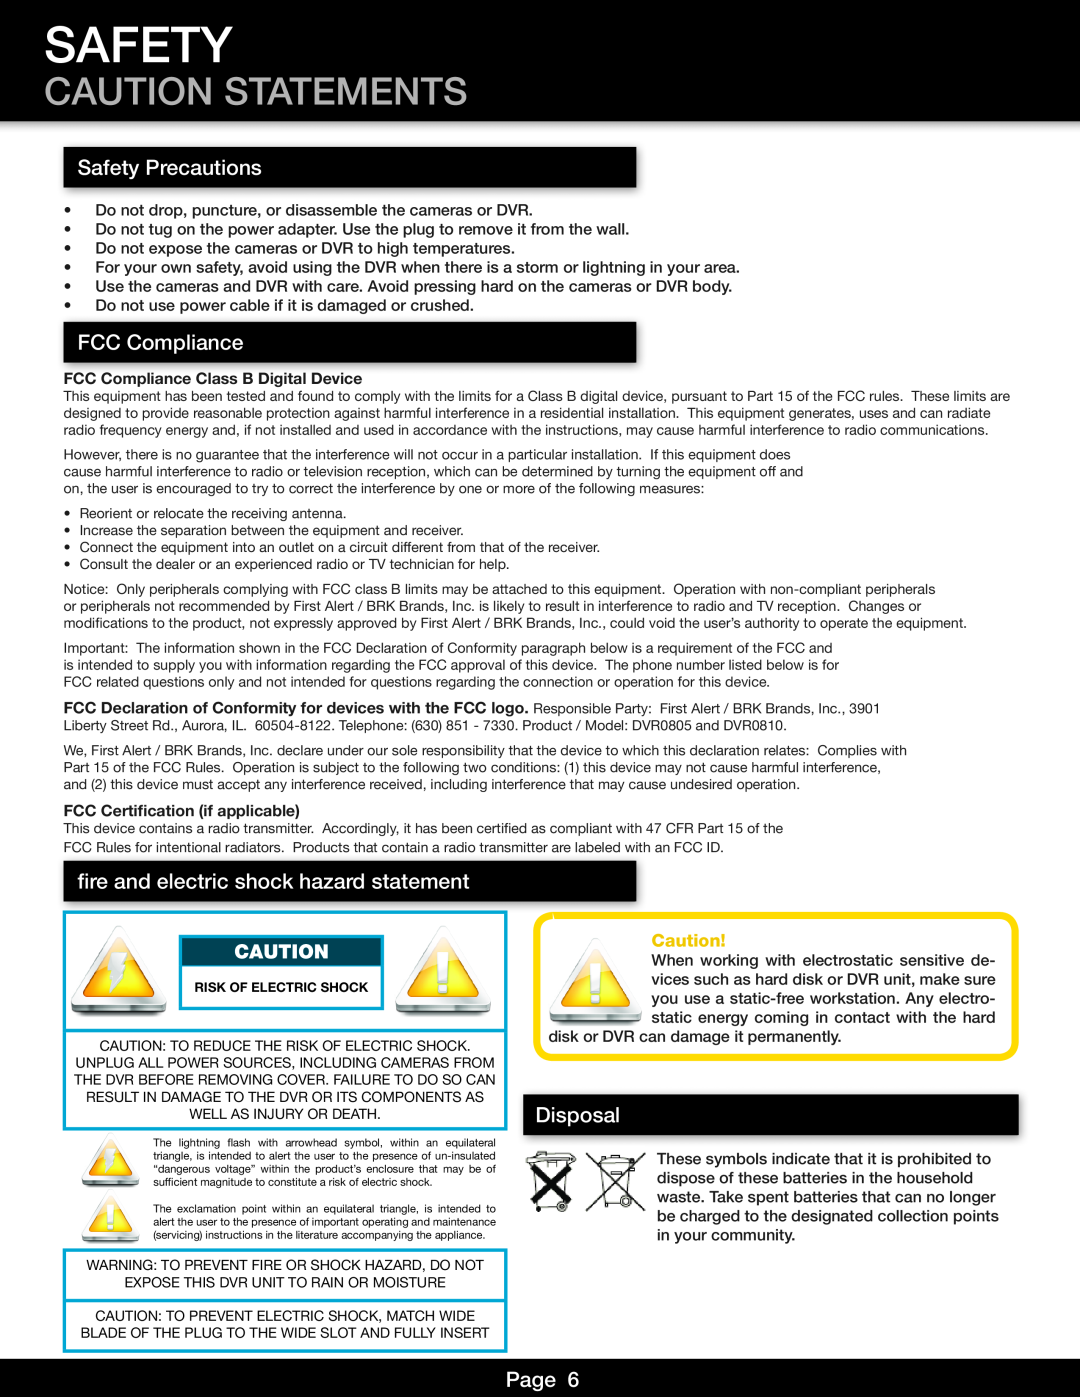 First Alert DVR0805 Caution Statements, Safety Precautions, FCC Compliance, fire and electric shock hazard statement 